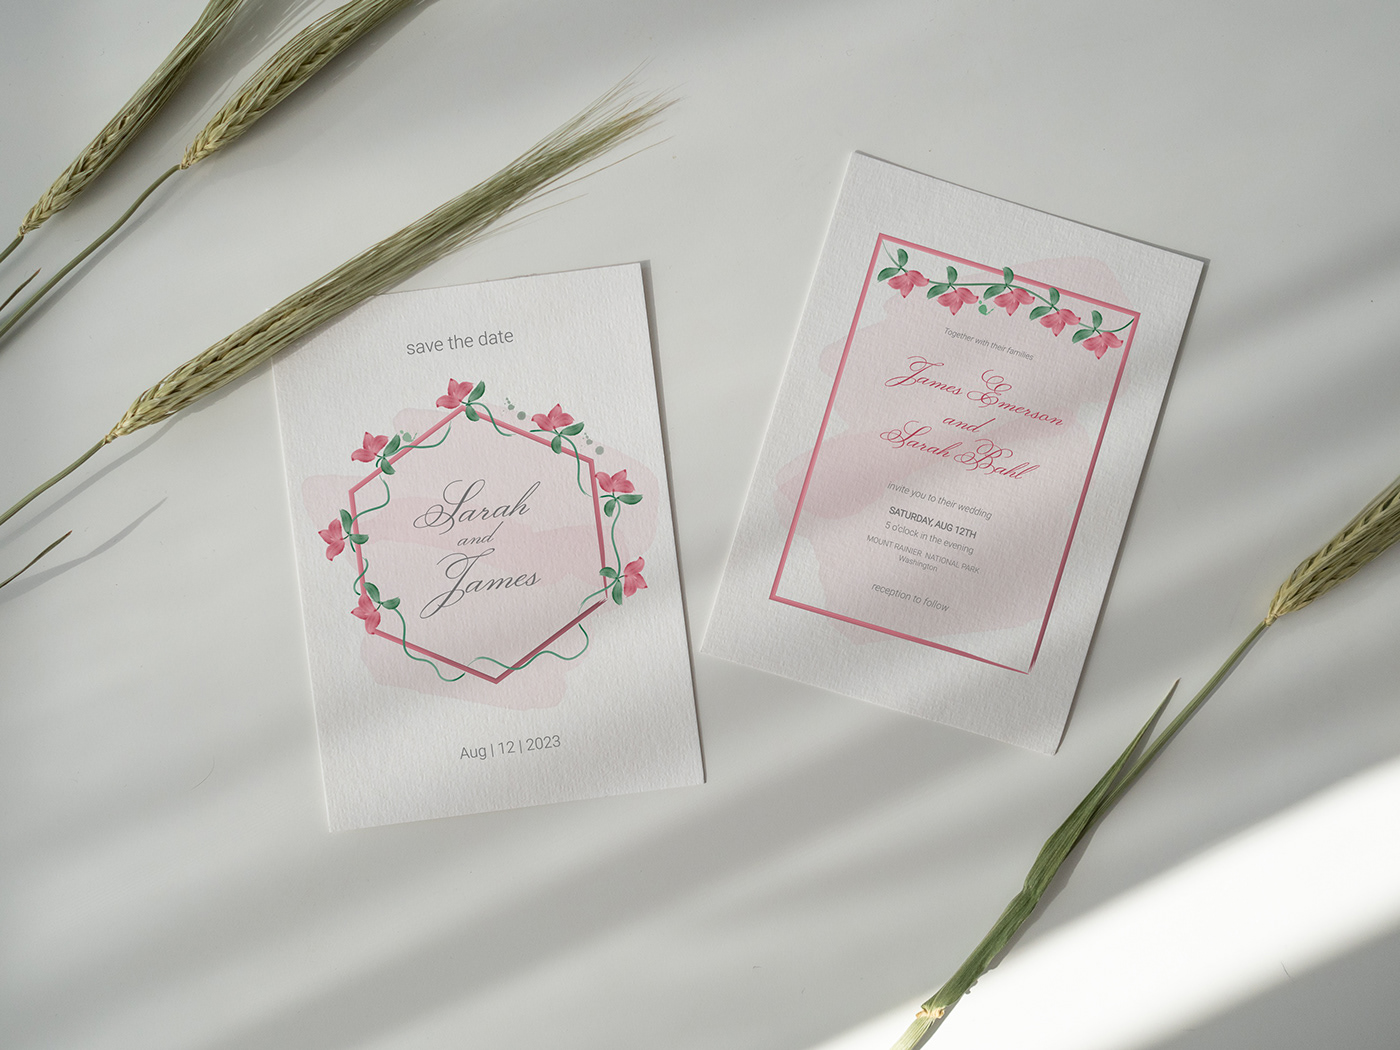 wedding wedding invitation Wedding Card Weddings Invitation invite save the date card Event watercolor